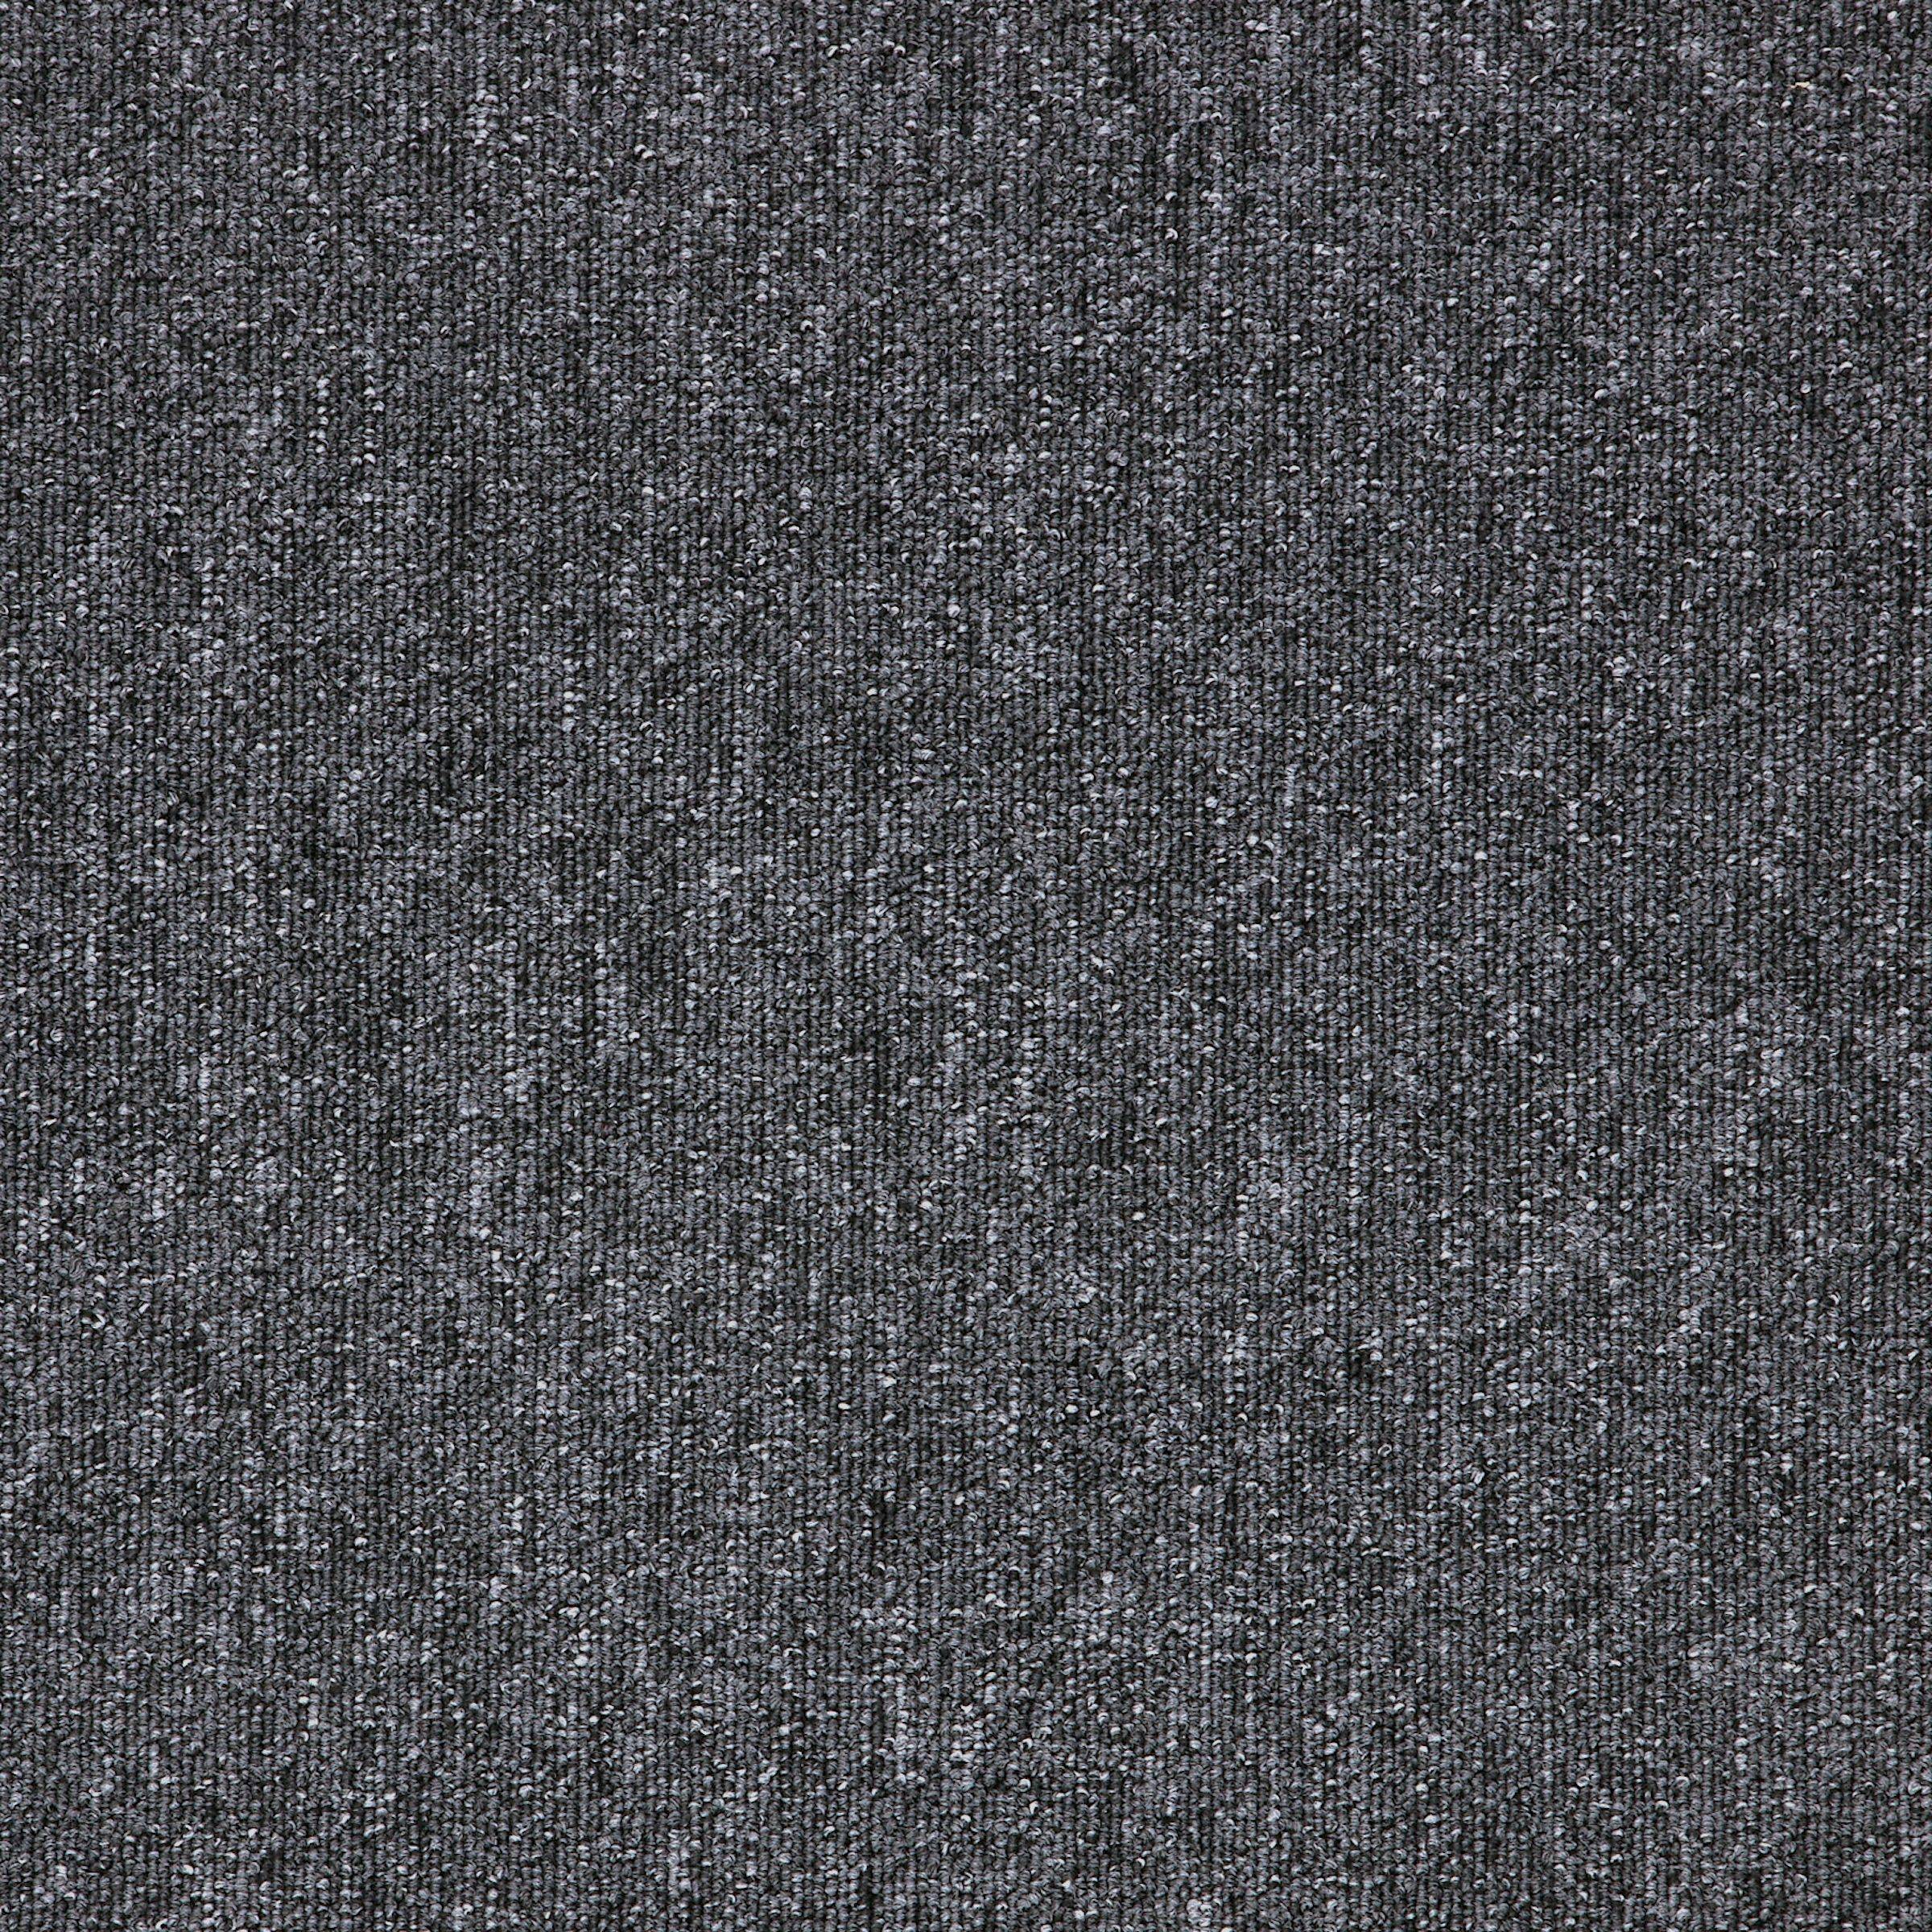 Flooring Hut Elements Carpet Tile Dark Grey